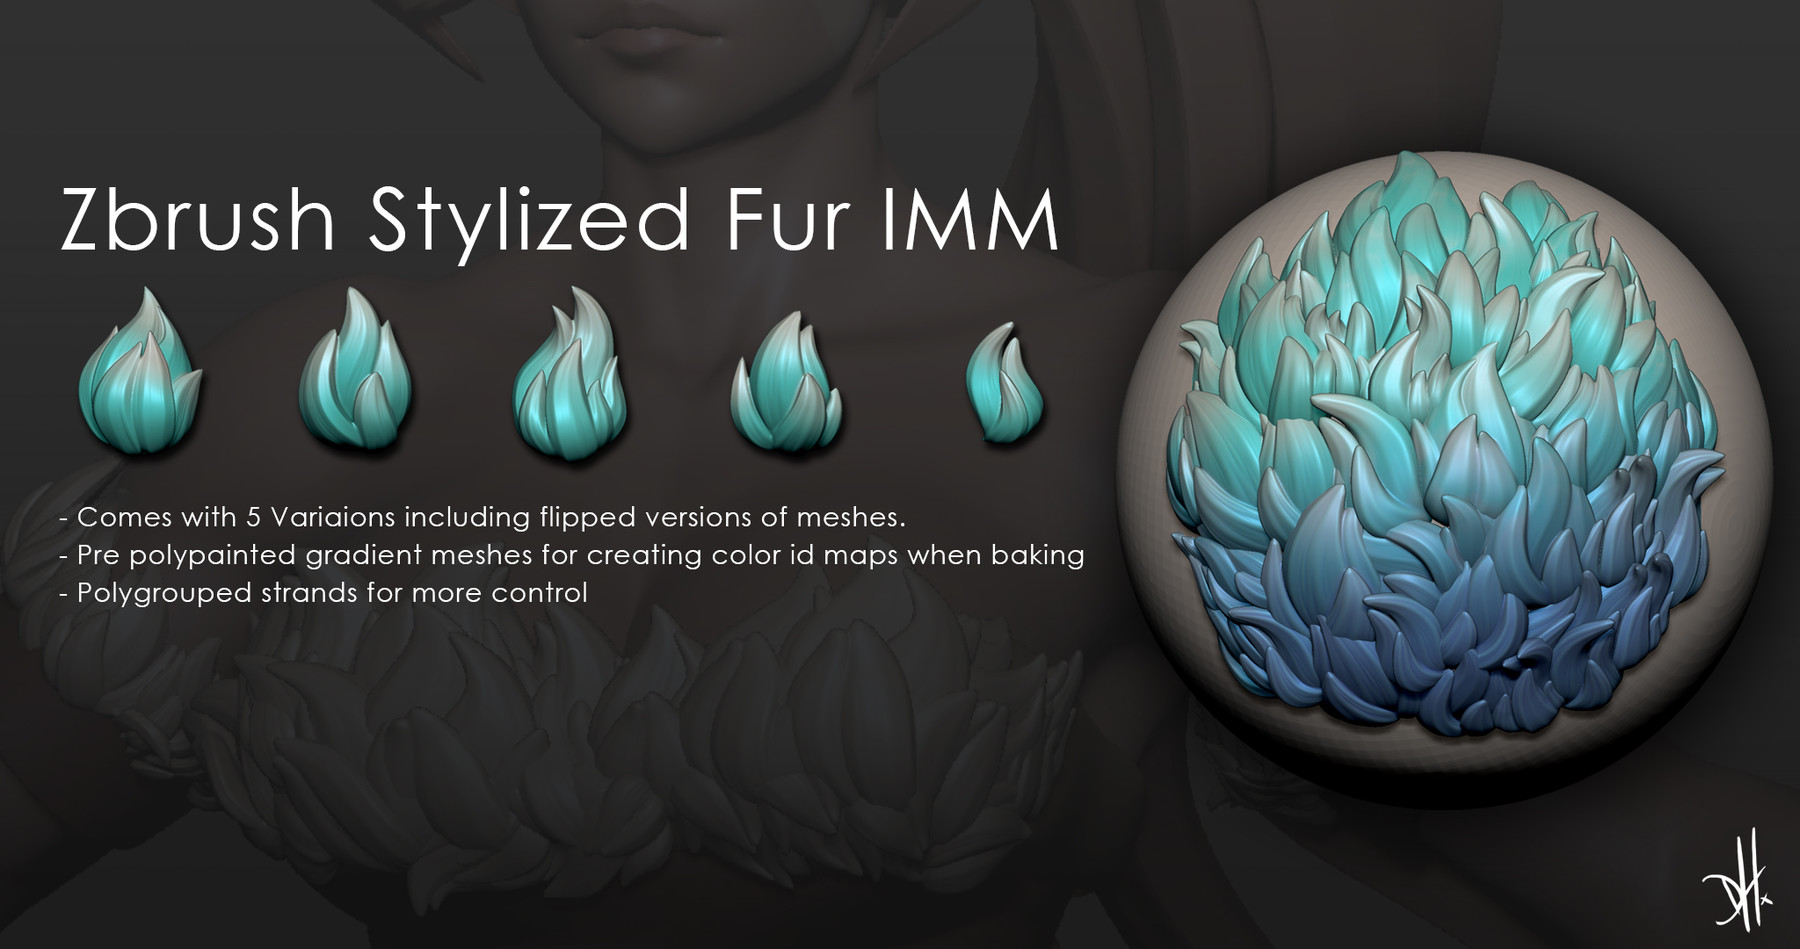 zbrush stylized fur